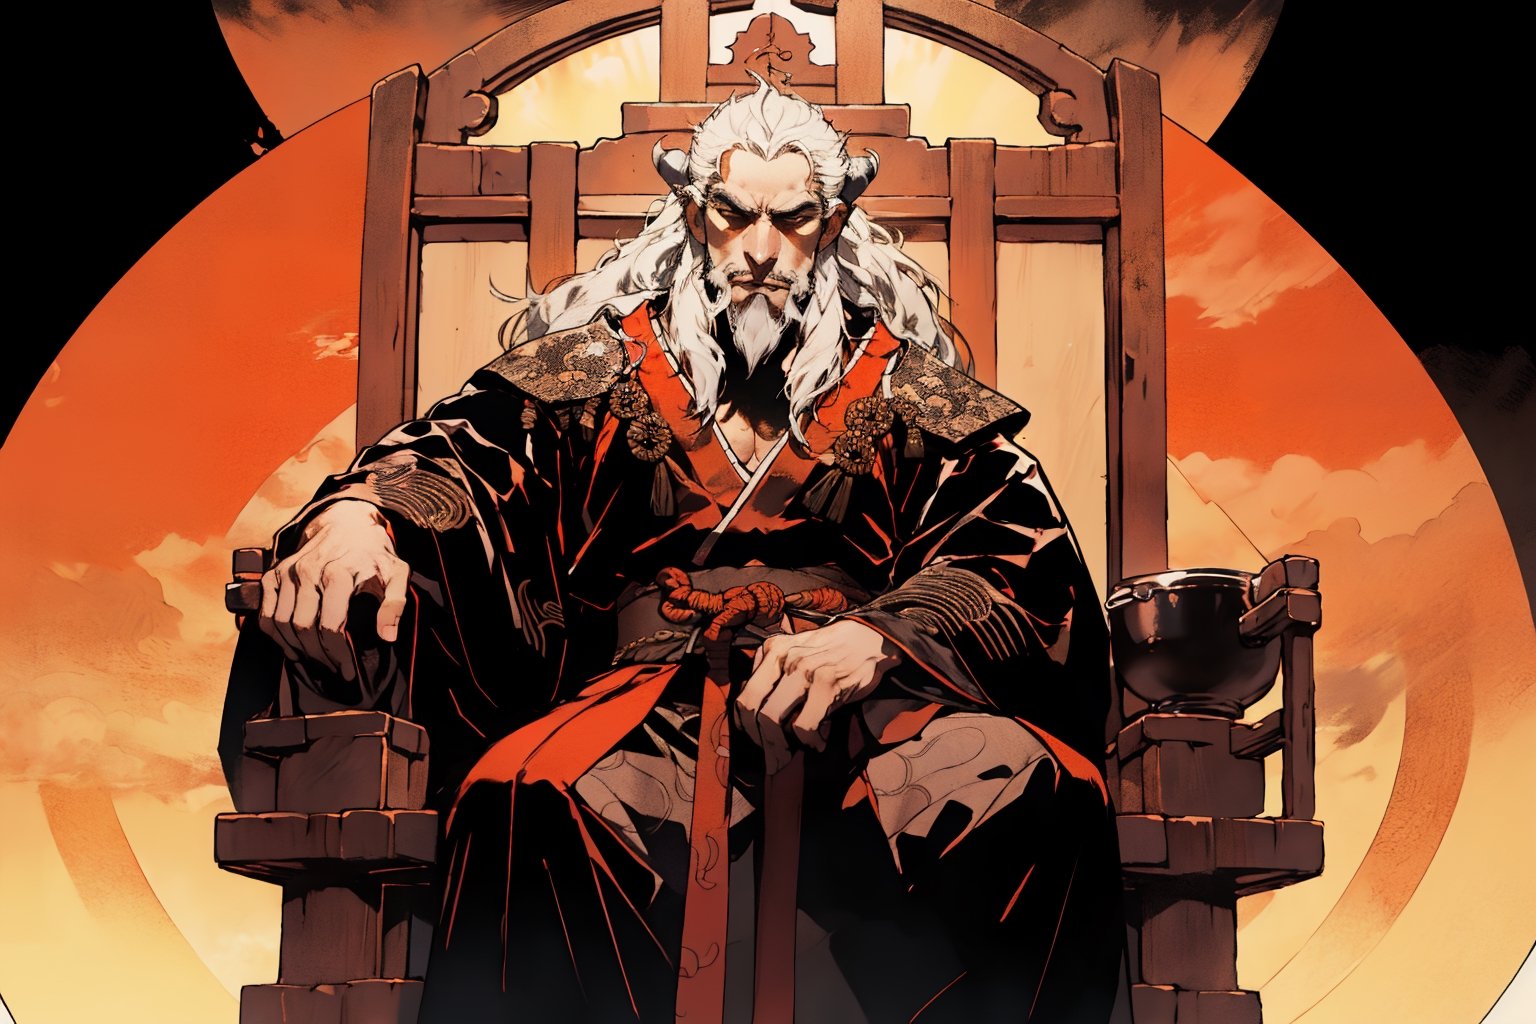 1boy,Fierce and dignified look,blad4,beard,shogun,feudal japan,seated on throne,Luminism,Symmetrical,1080P,nodf_lora,LINEART